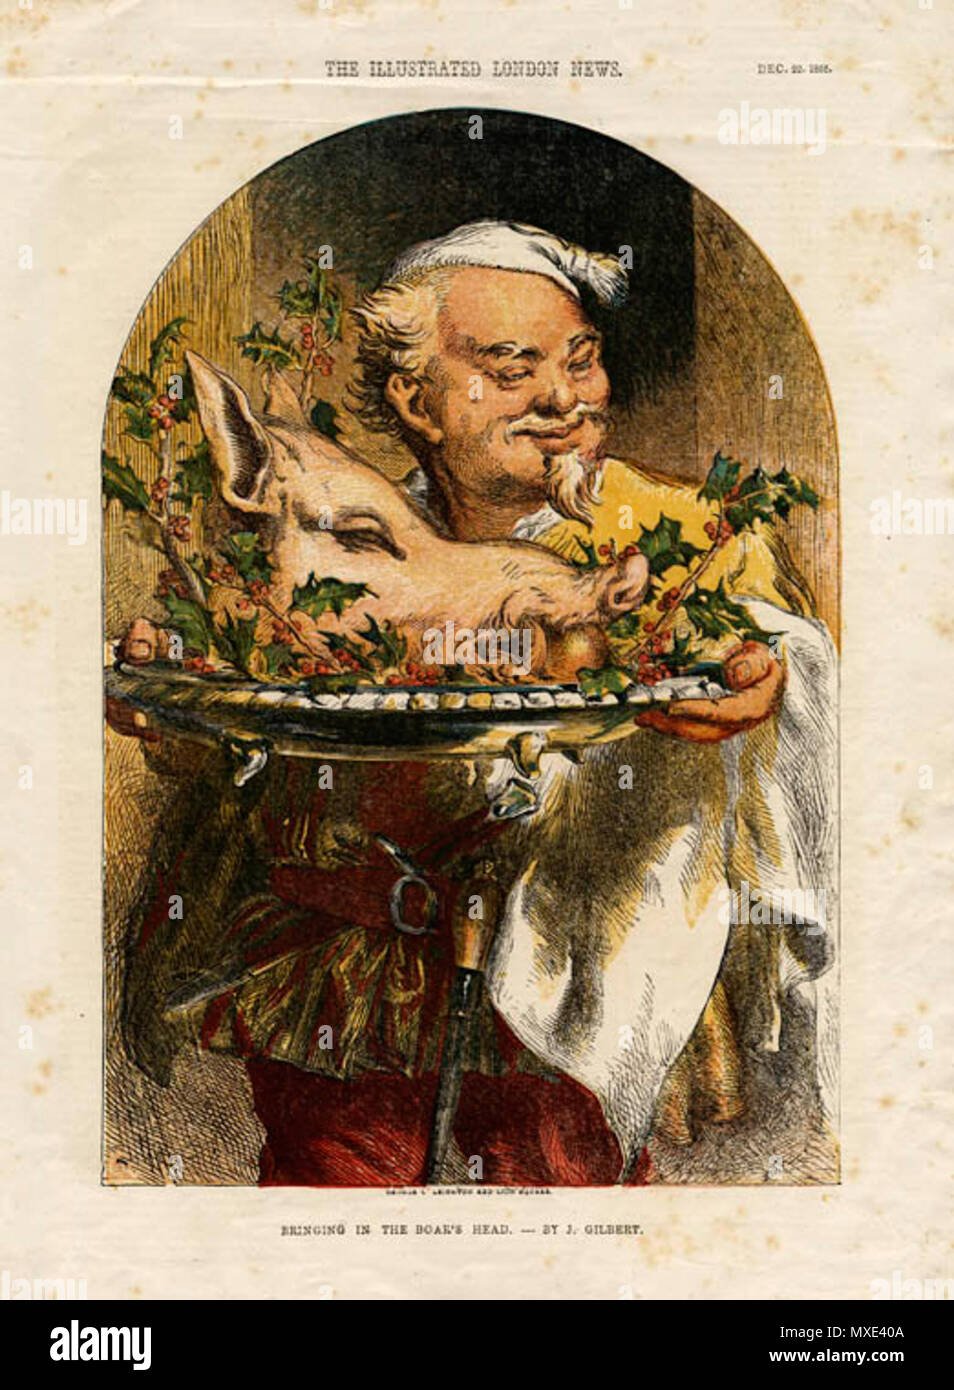 Poner la cabeza de jabalí en el Illustrated London News [98] trayendo el jabalí la cabeza Foto de stock